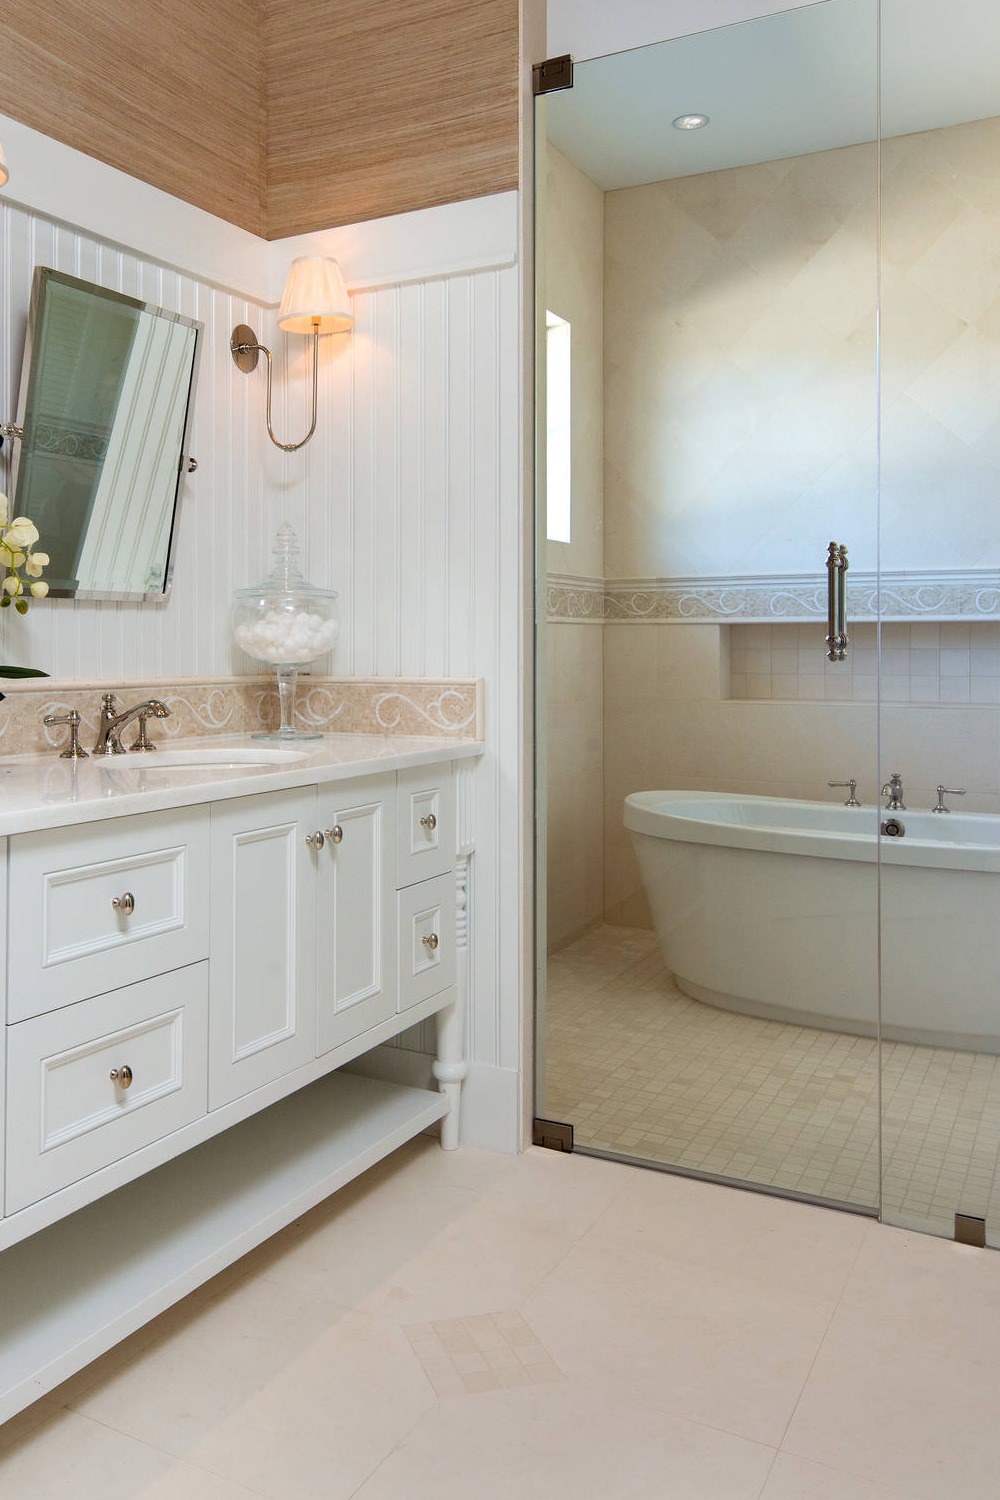 Large Format Cream Flooring Cabinetry Undermount Sink Hinged Shower Door Free Standing Bath Tub Mosaic